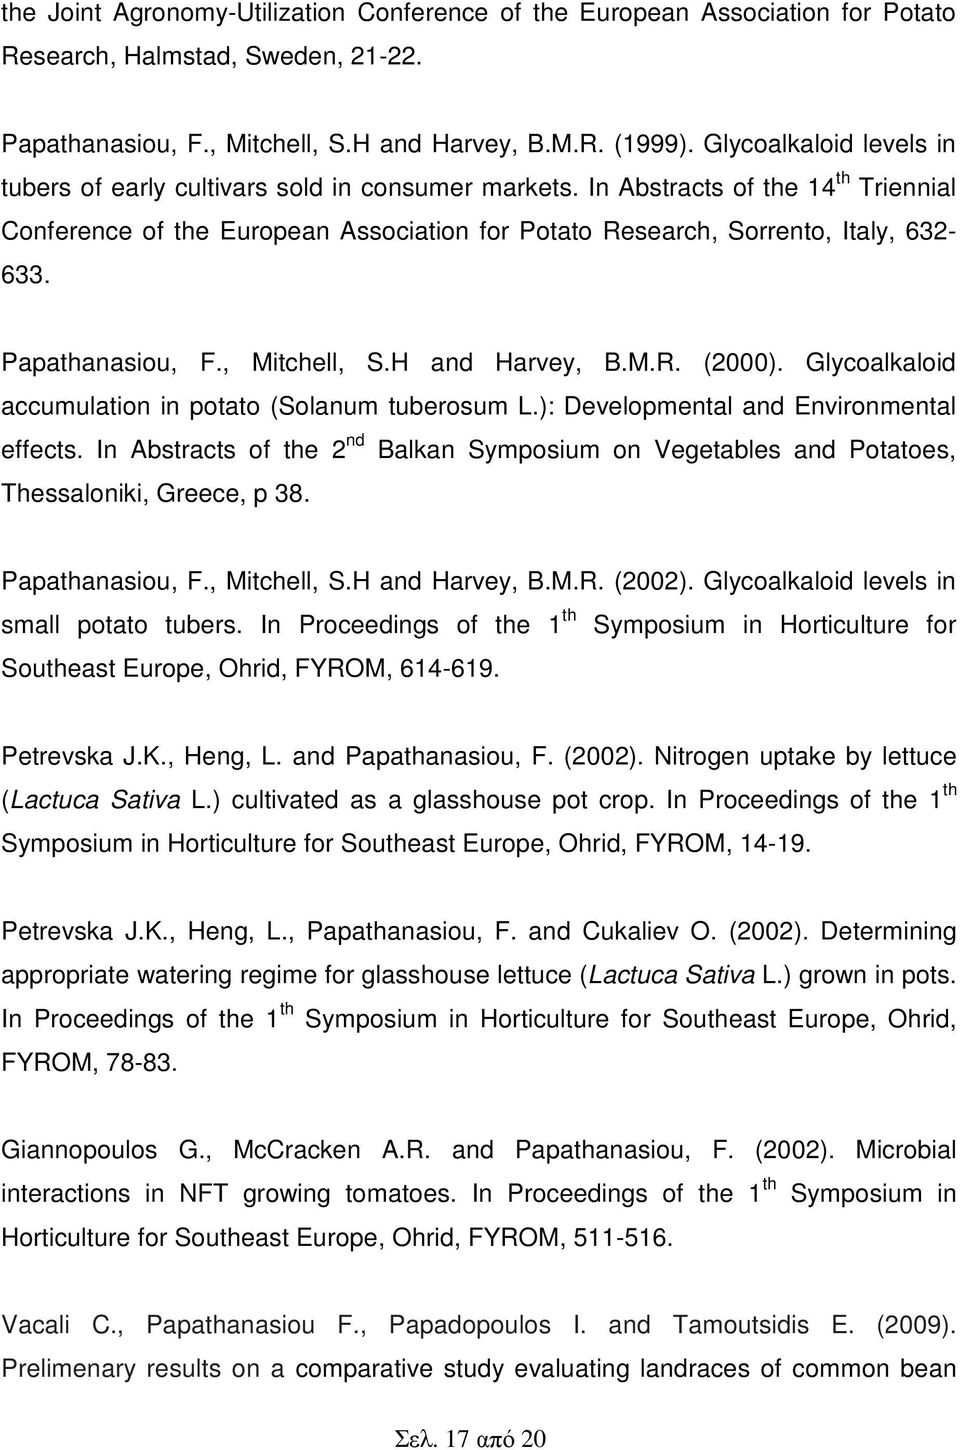 Papathanasiou, F., Mitchell, S.H and Harvey, B.M.R. (2000). Glycoalkaloid accumulation in potato (Solanum tuberosum L.): Developmental and Environmental effects.